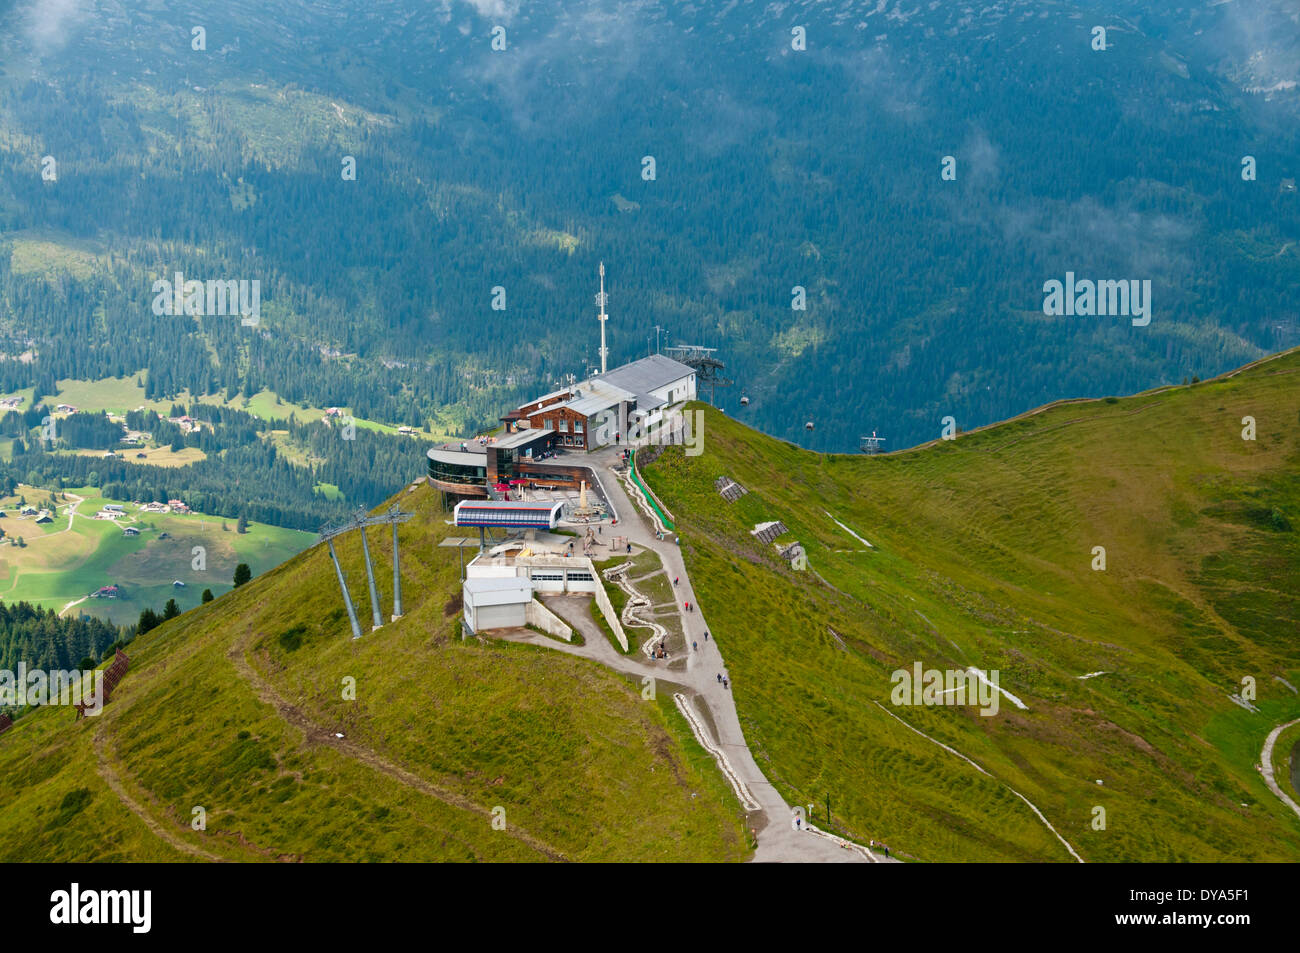 Regione di Allgäu, stazione di montagna, Europa Kanzelwandbahn, strada di montagna, Kleinwalsertal, Austria Vorarlberg Foto Stock